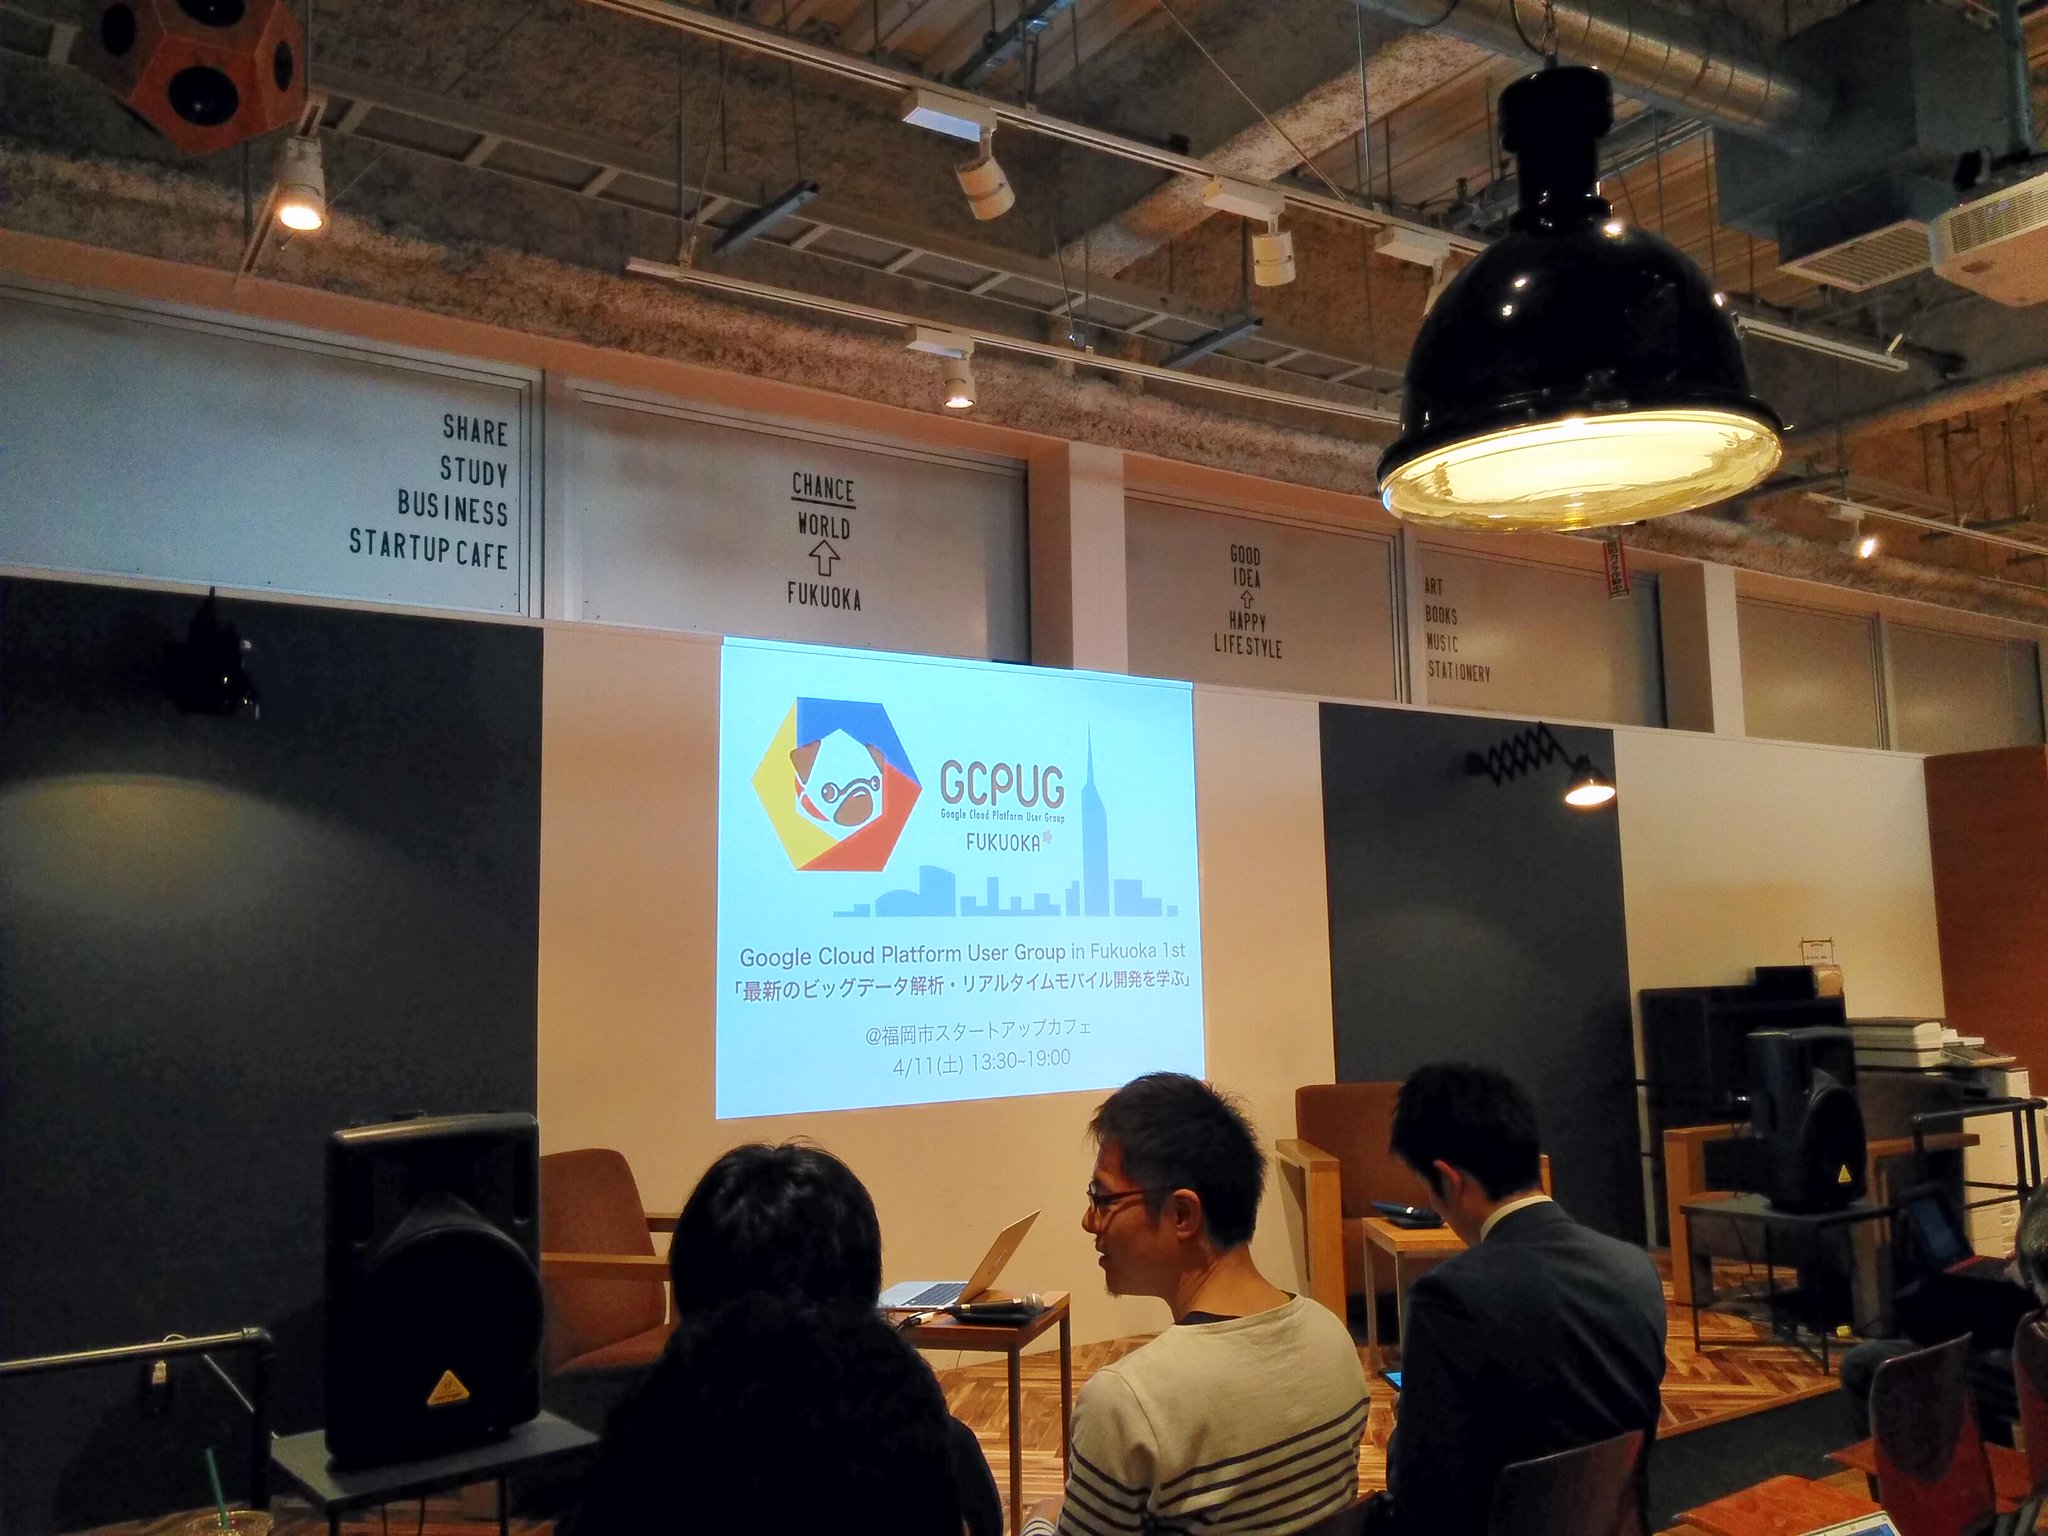 GCPUG in Fukuoka 1stまとめ！ #gcpug